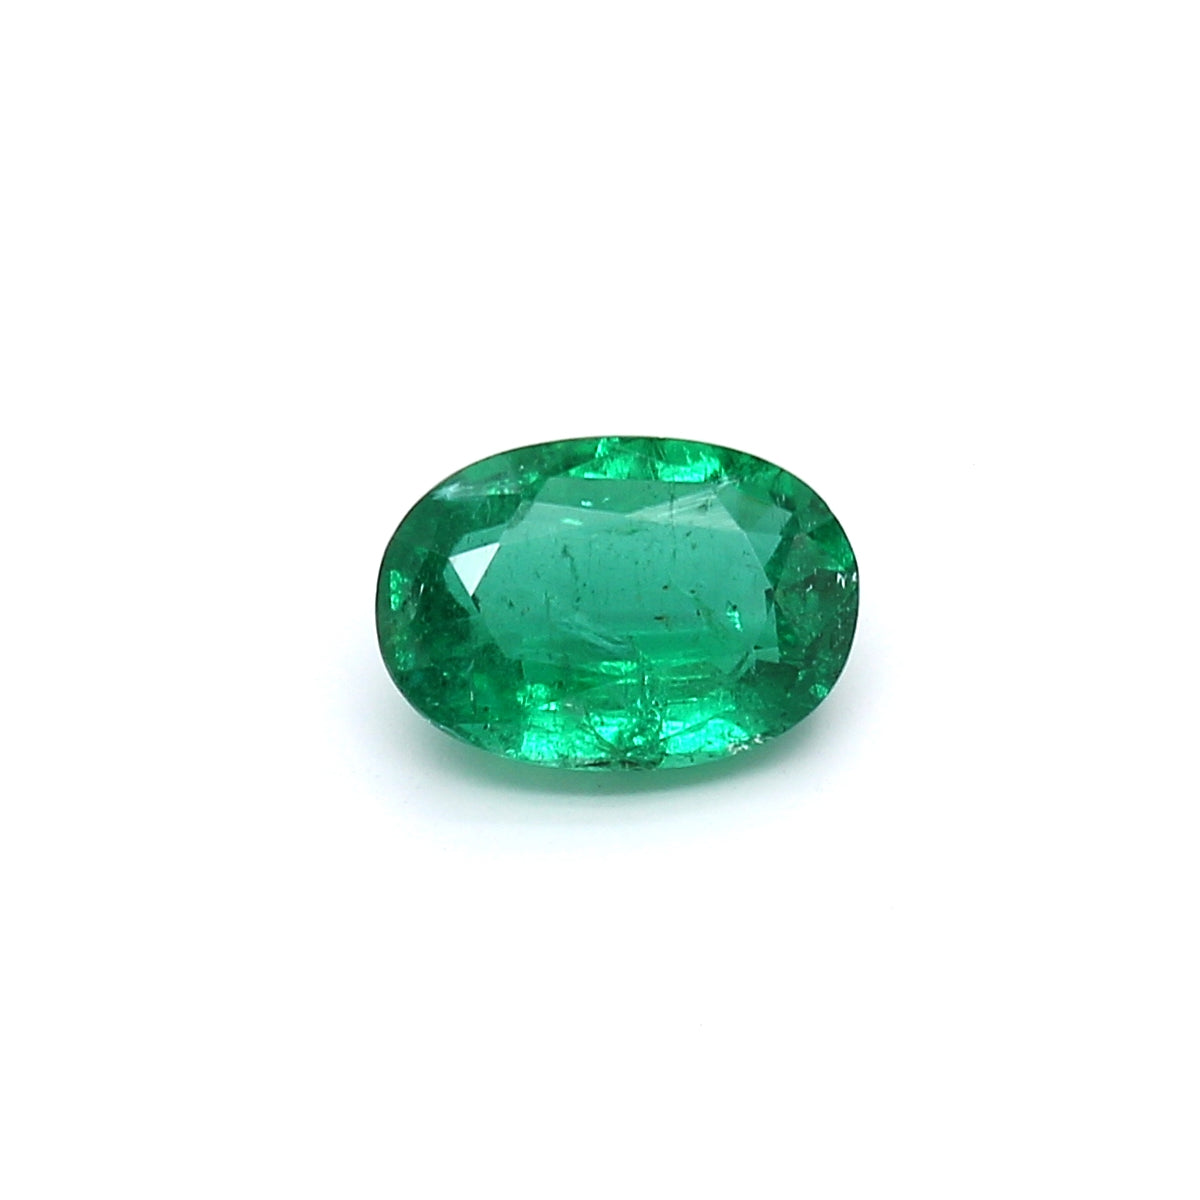 1.14ct Oval Emerald, Minor Oil, Zambia - 8.42 x 5.87 x 3.48mm